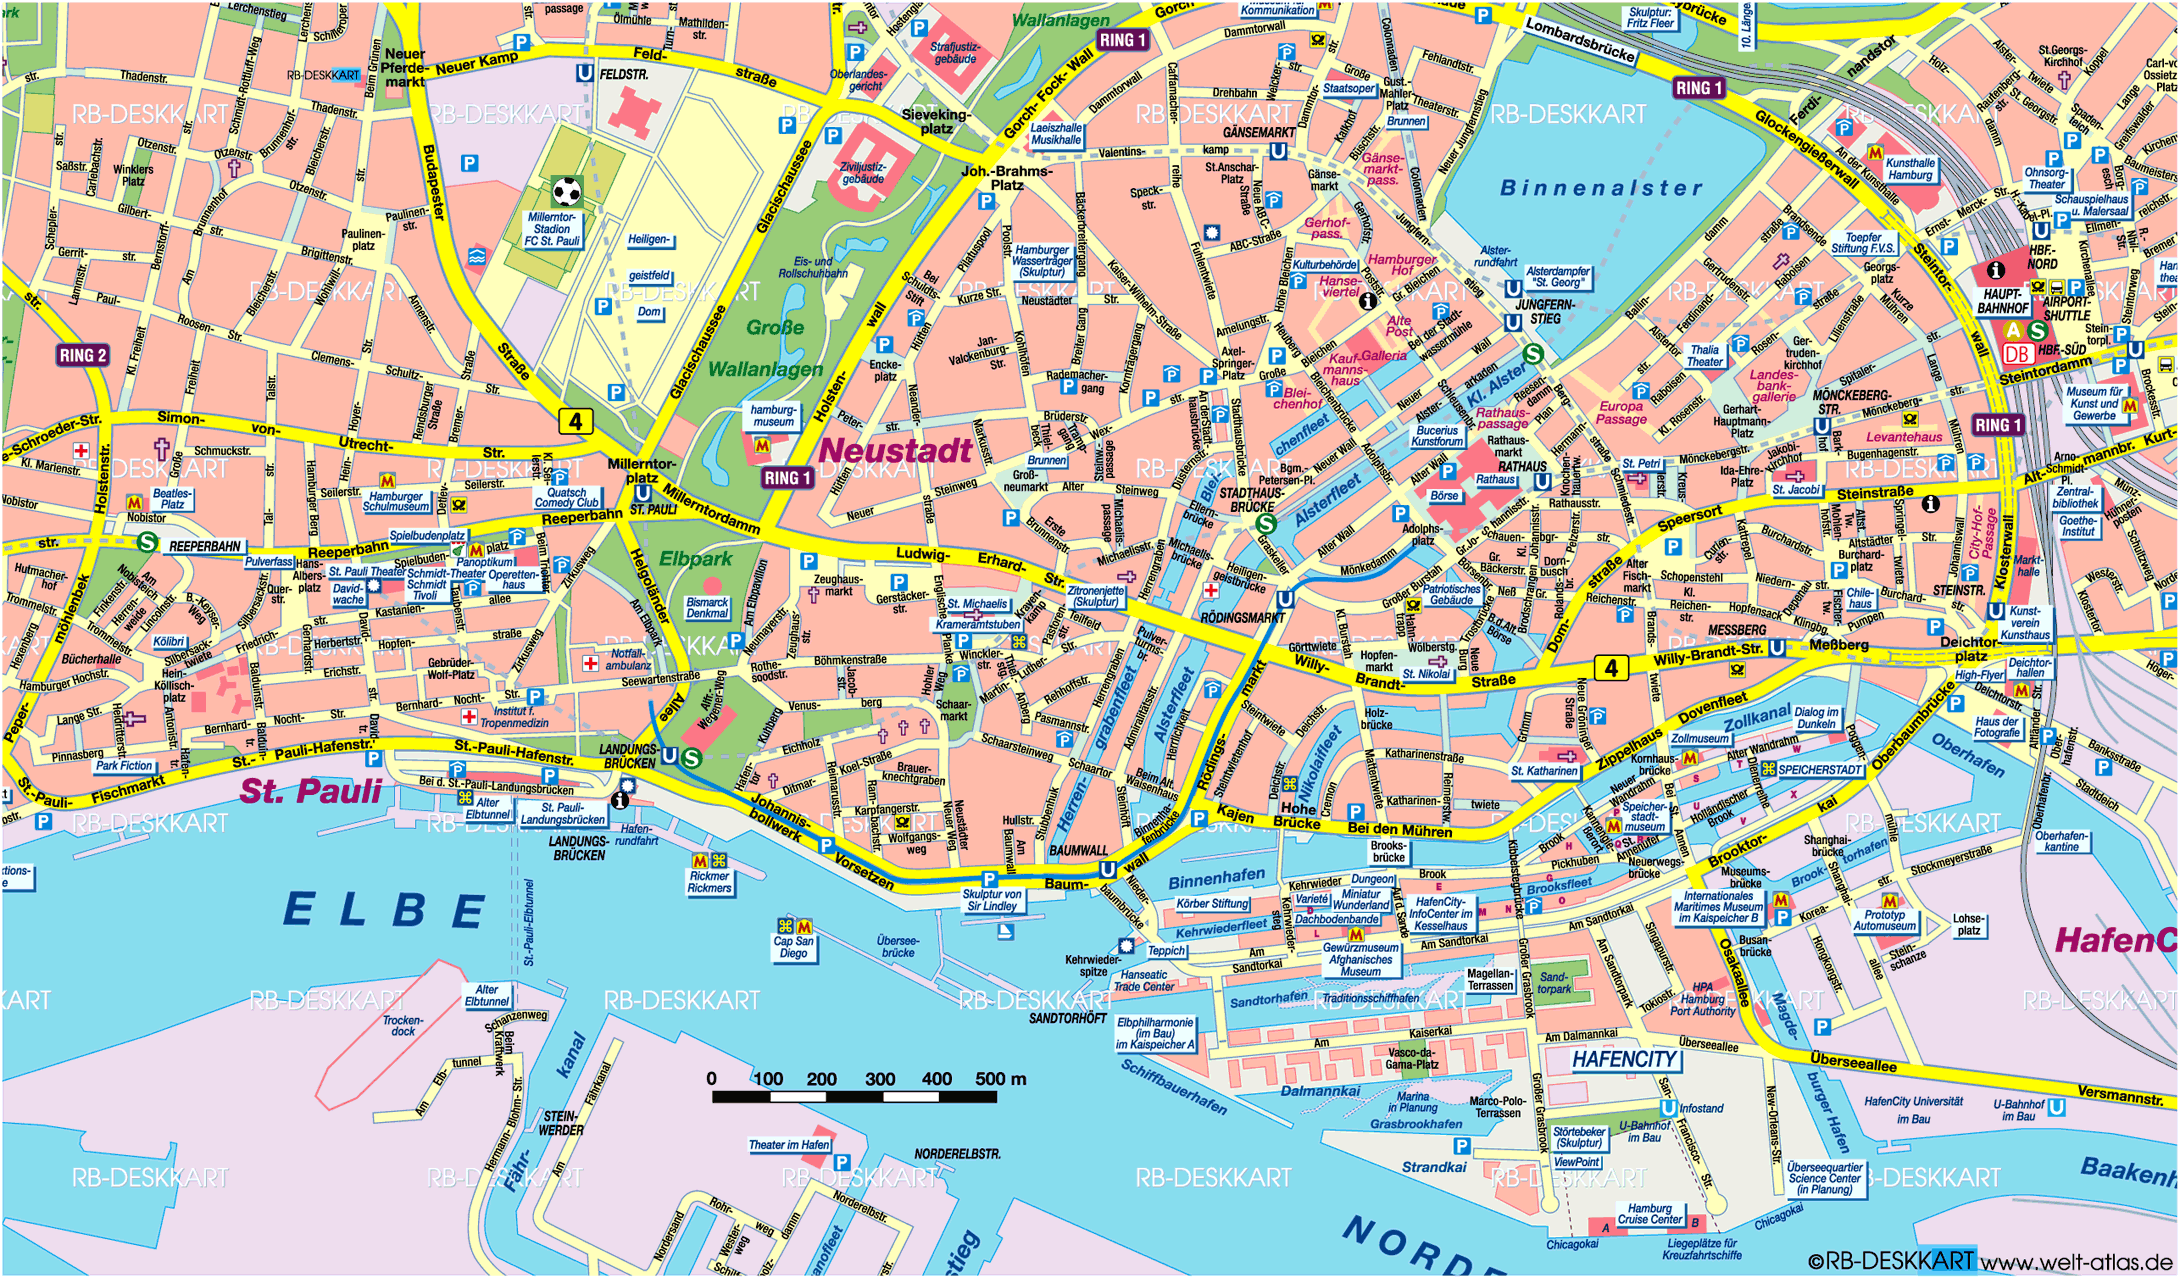 Detailed city map of Hamburg, street map